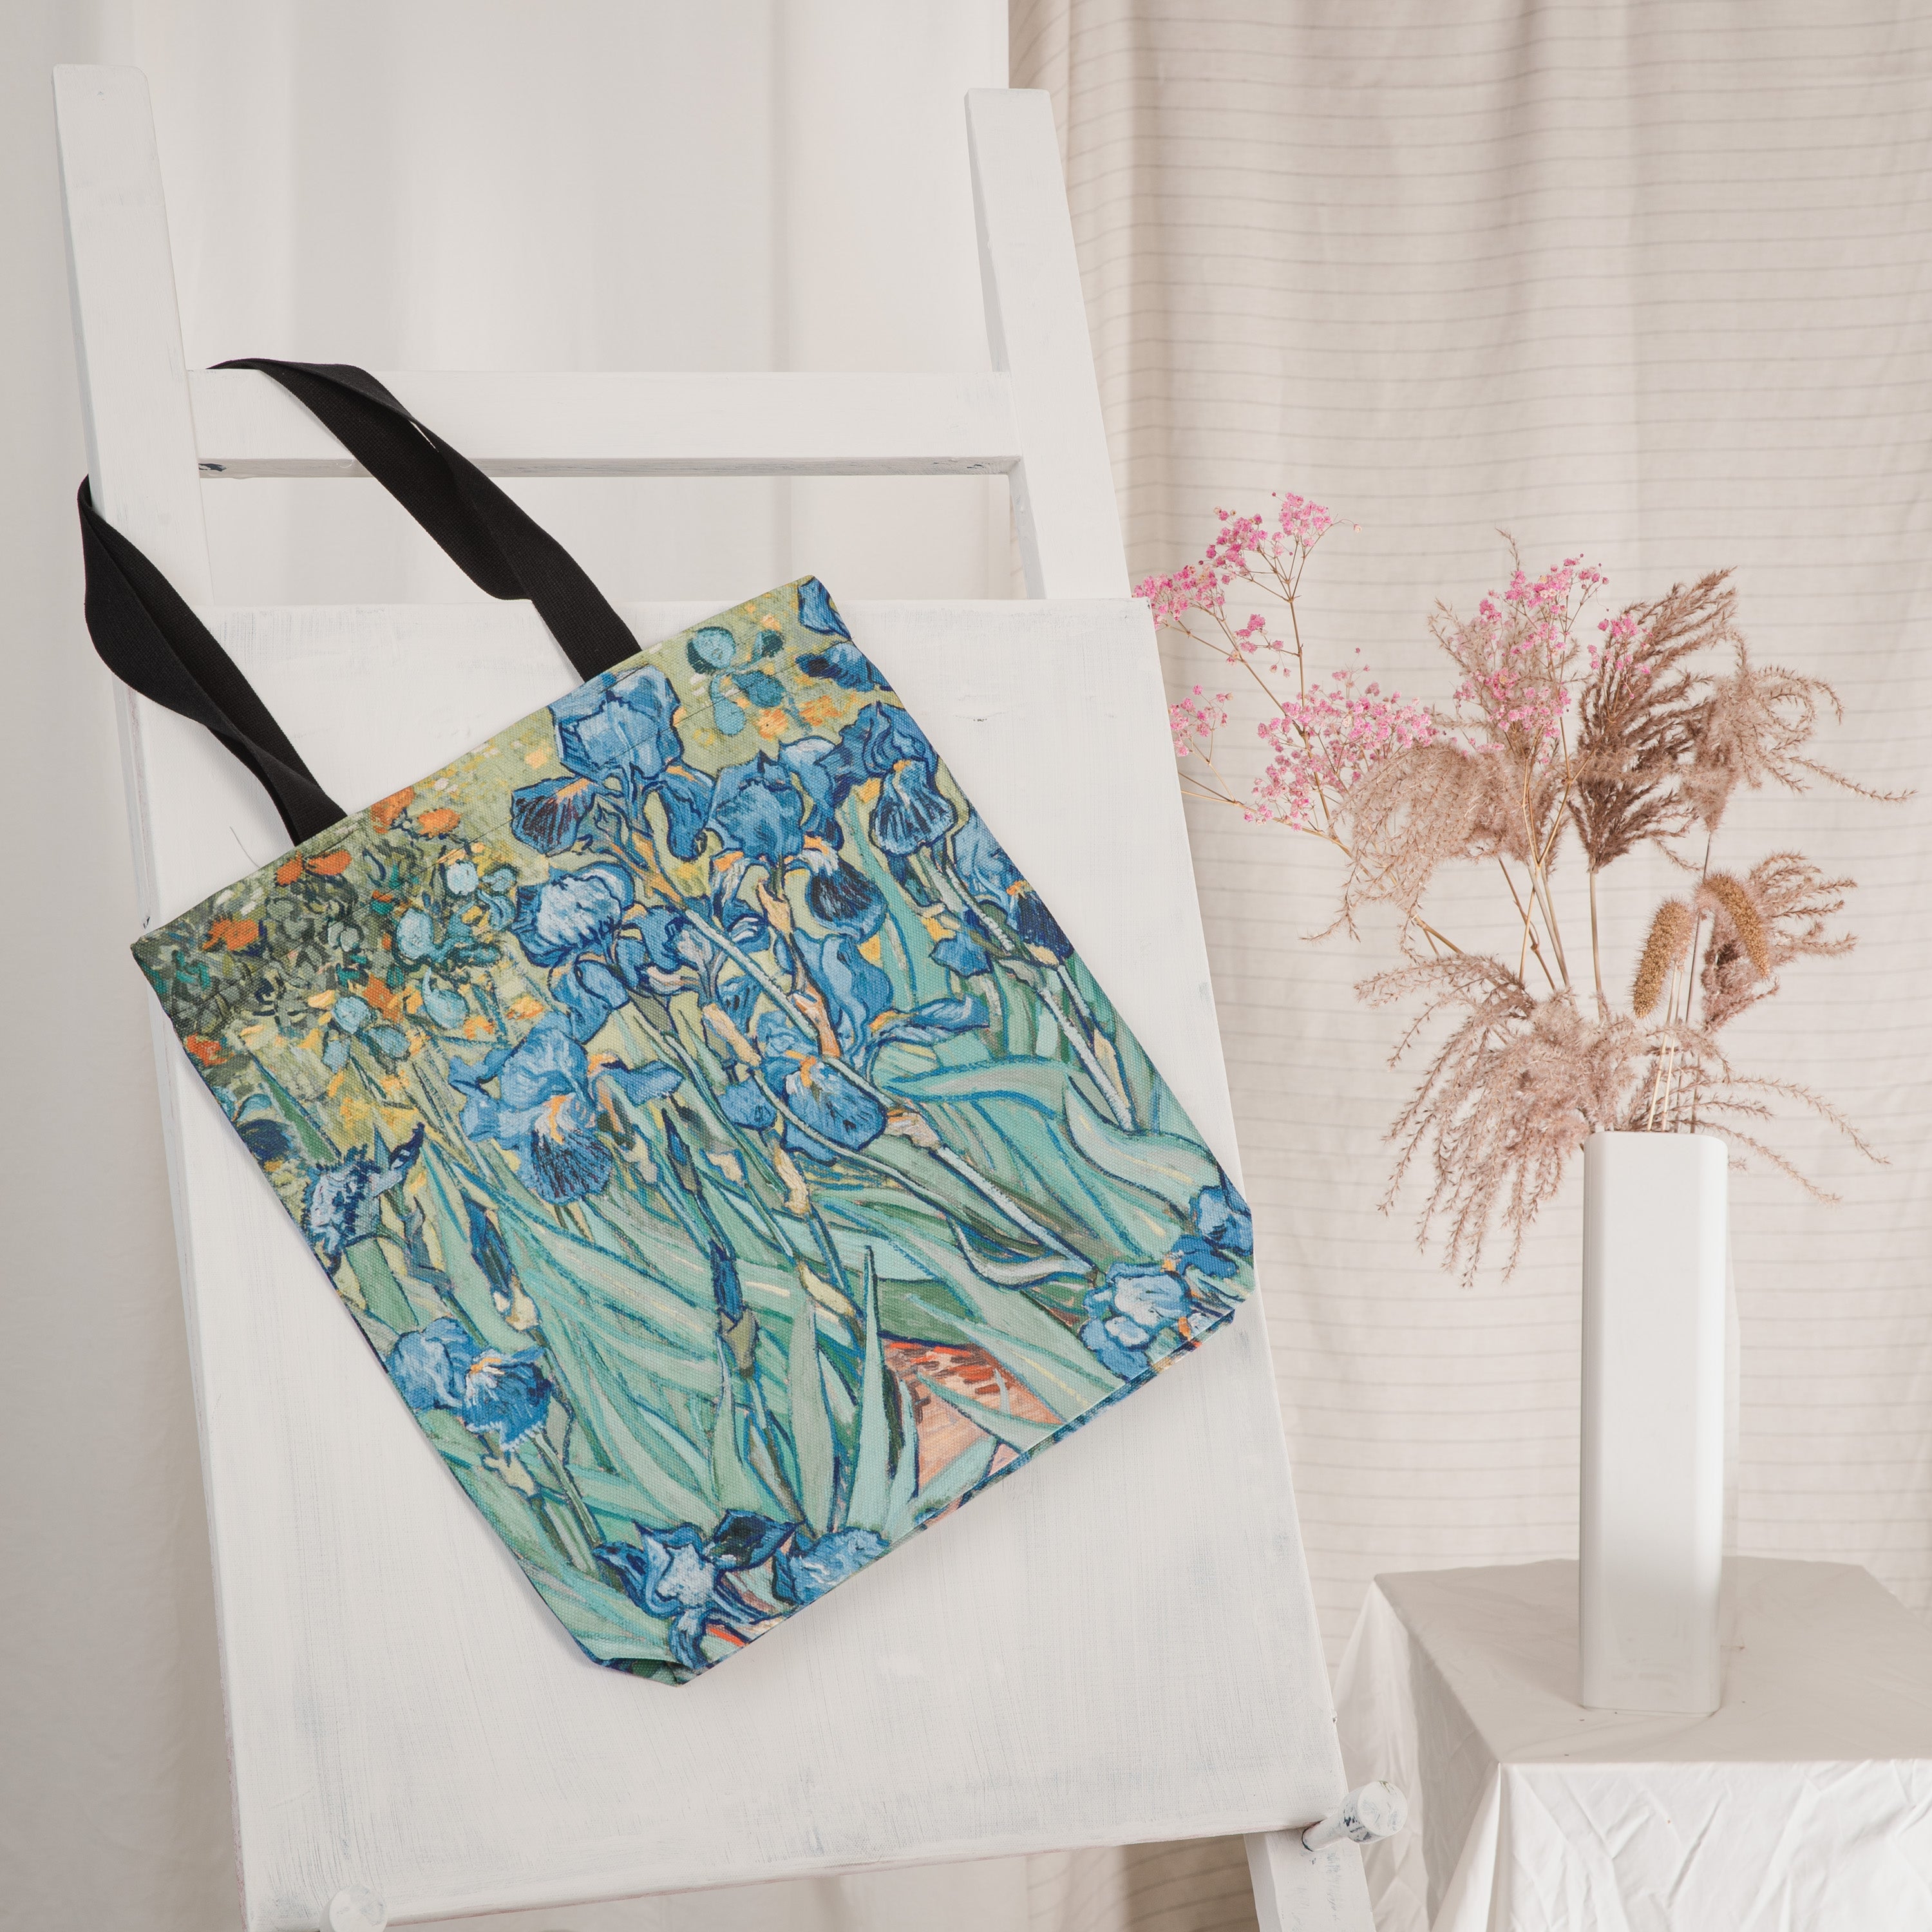 Pirkinių krepšys Vincent van Gogh "Irises"